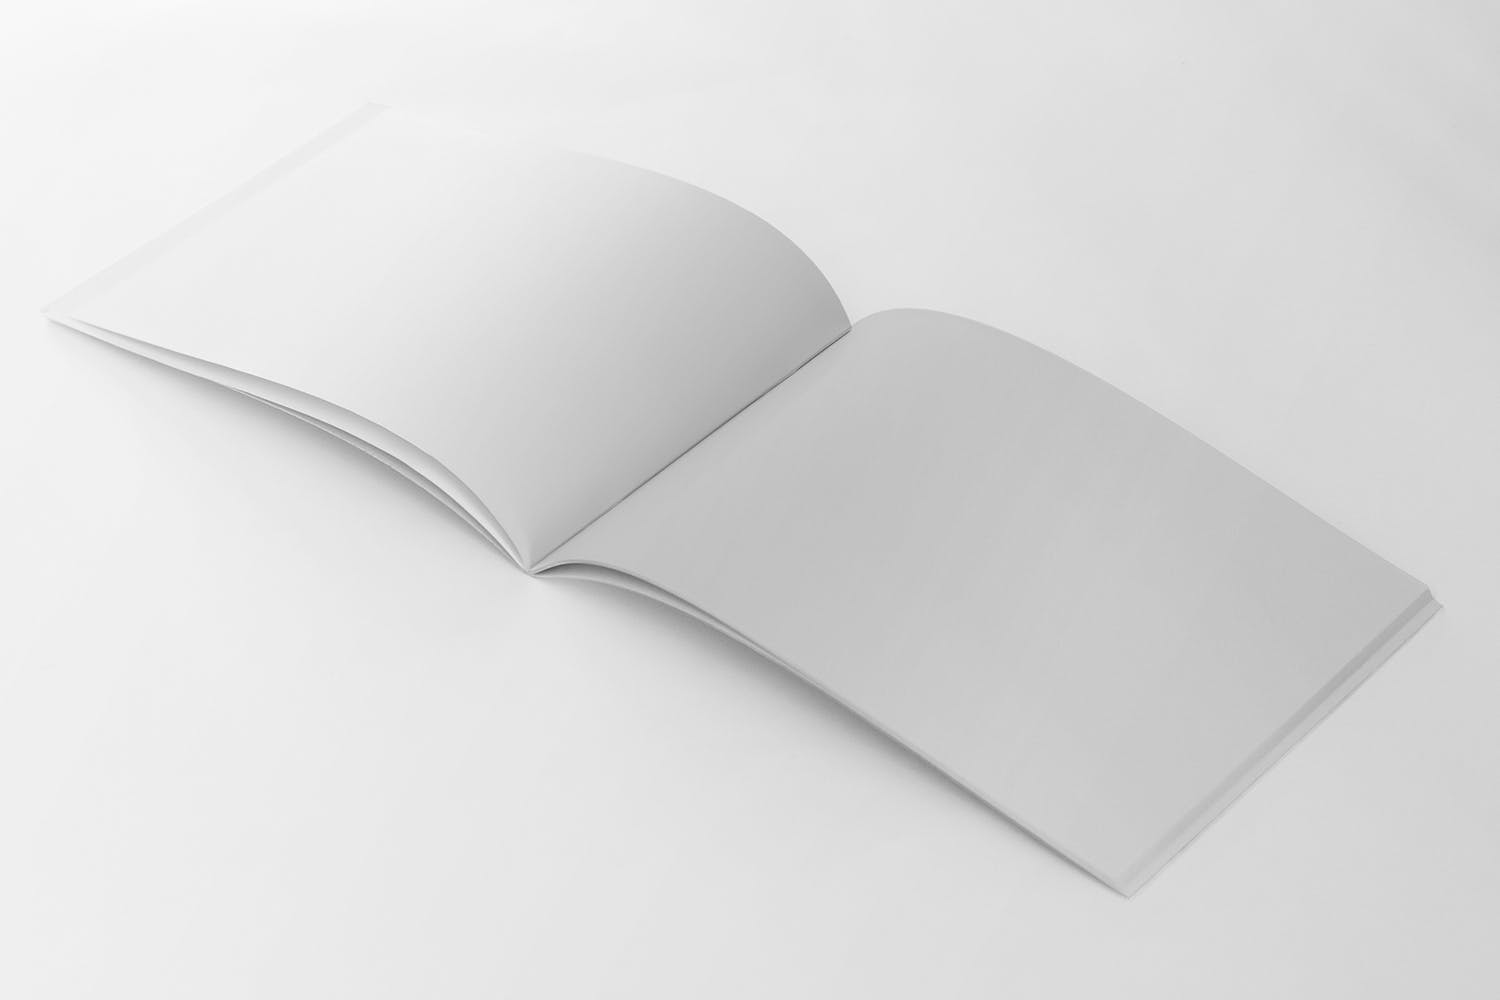 美国信纸规格宣传册内页透视图样机16图库精选 US Half Letter Brochure Mockup Perspective View插图(1)